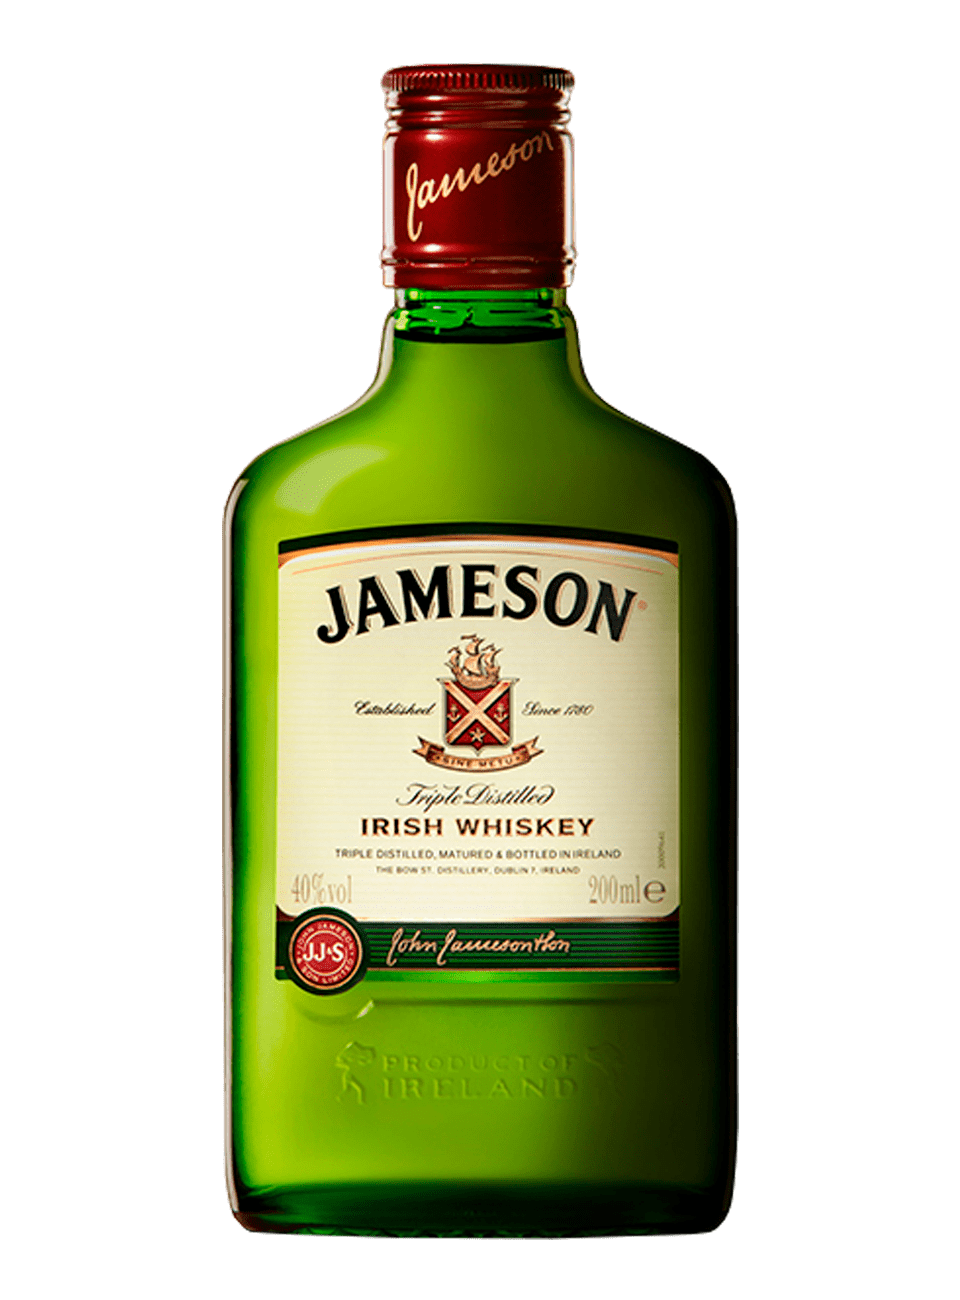 Джемесон Айриш виски. Джон джемисон виски. Виски ирландский купажированный Джемесон. Джеймсон Айриш виски.